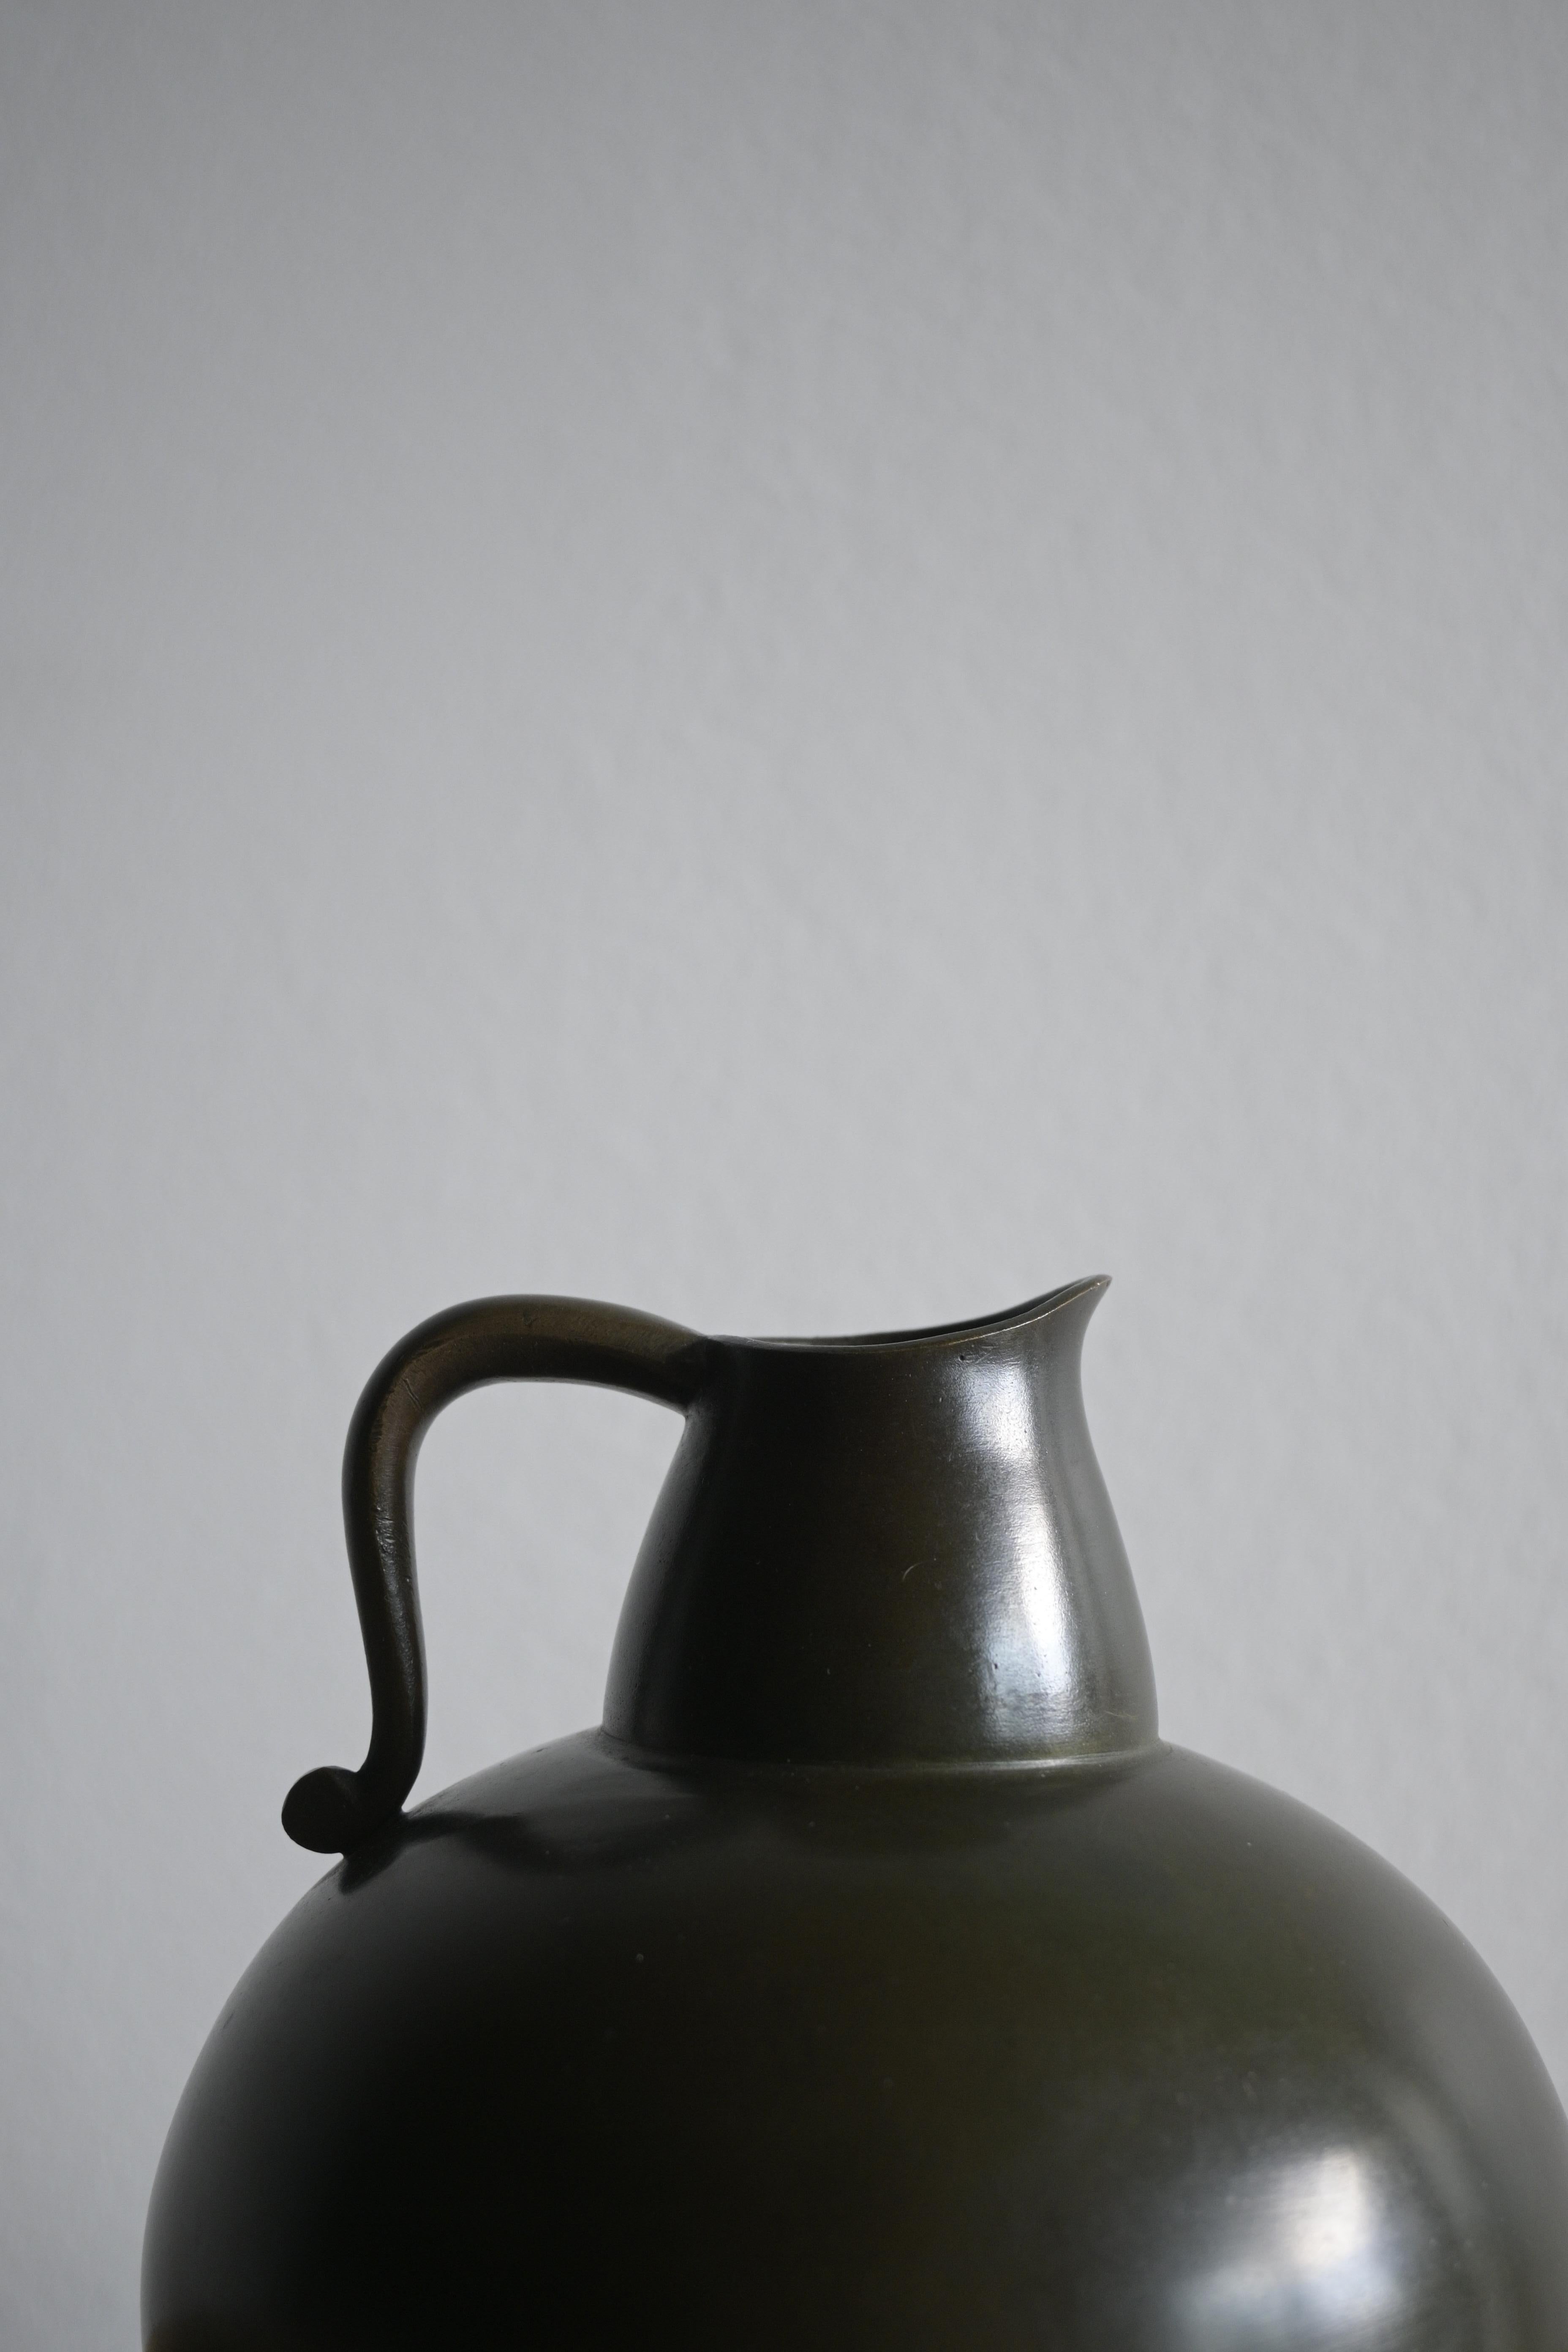 Vase designed and produced by GAB, Guldsmedsaktiebolaget, Sweden, 1930s. 

Stamped with makers mark. 

Made in cast bronze.

Heigth: 14.5 cm/5.7 inch
Diameter: 13.5 cm/5.3 inch